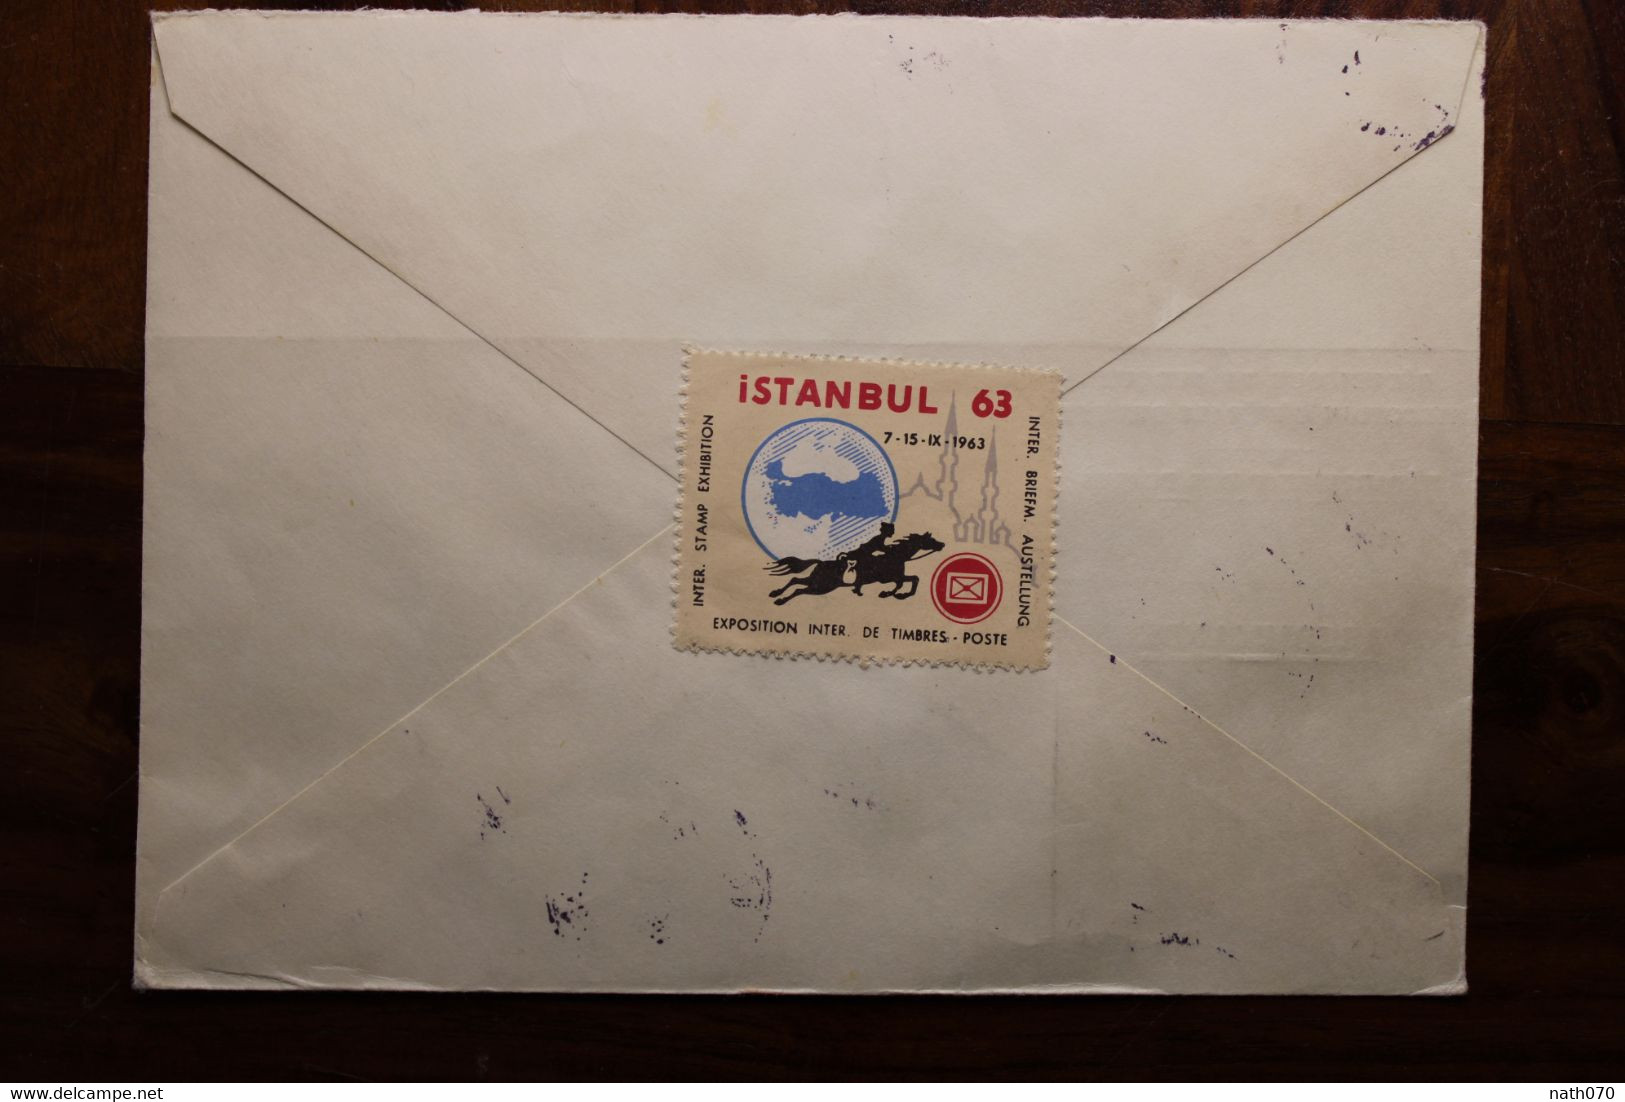 Turquie 1963 Recommandé Röttingen Türkei Air Mail Cover Par Avion Allemagne Turkey Türkiye - Lettres & Documents